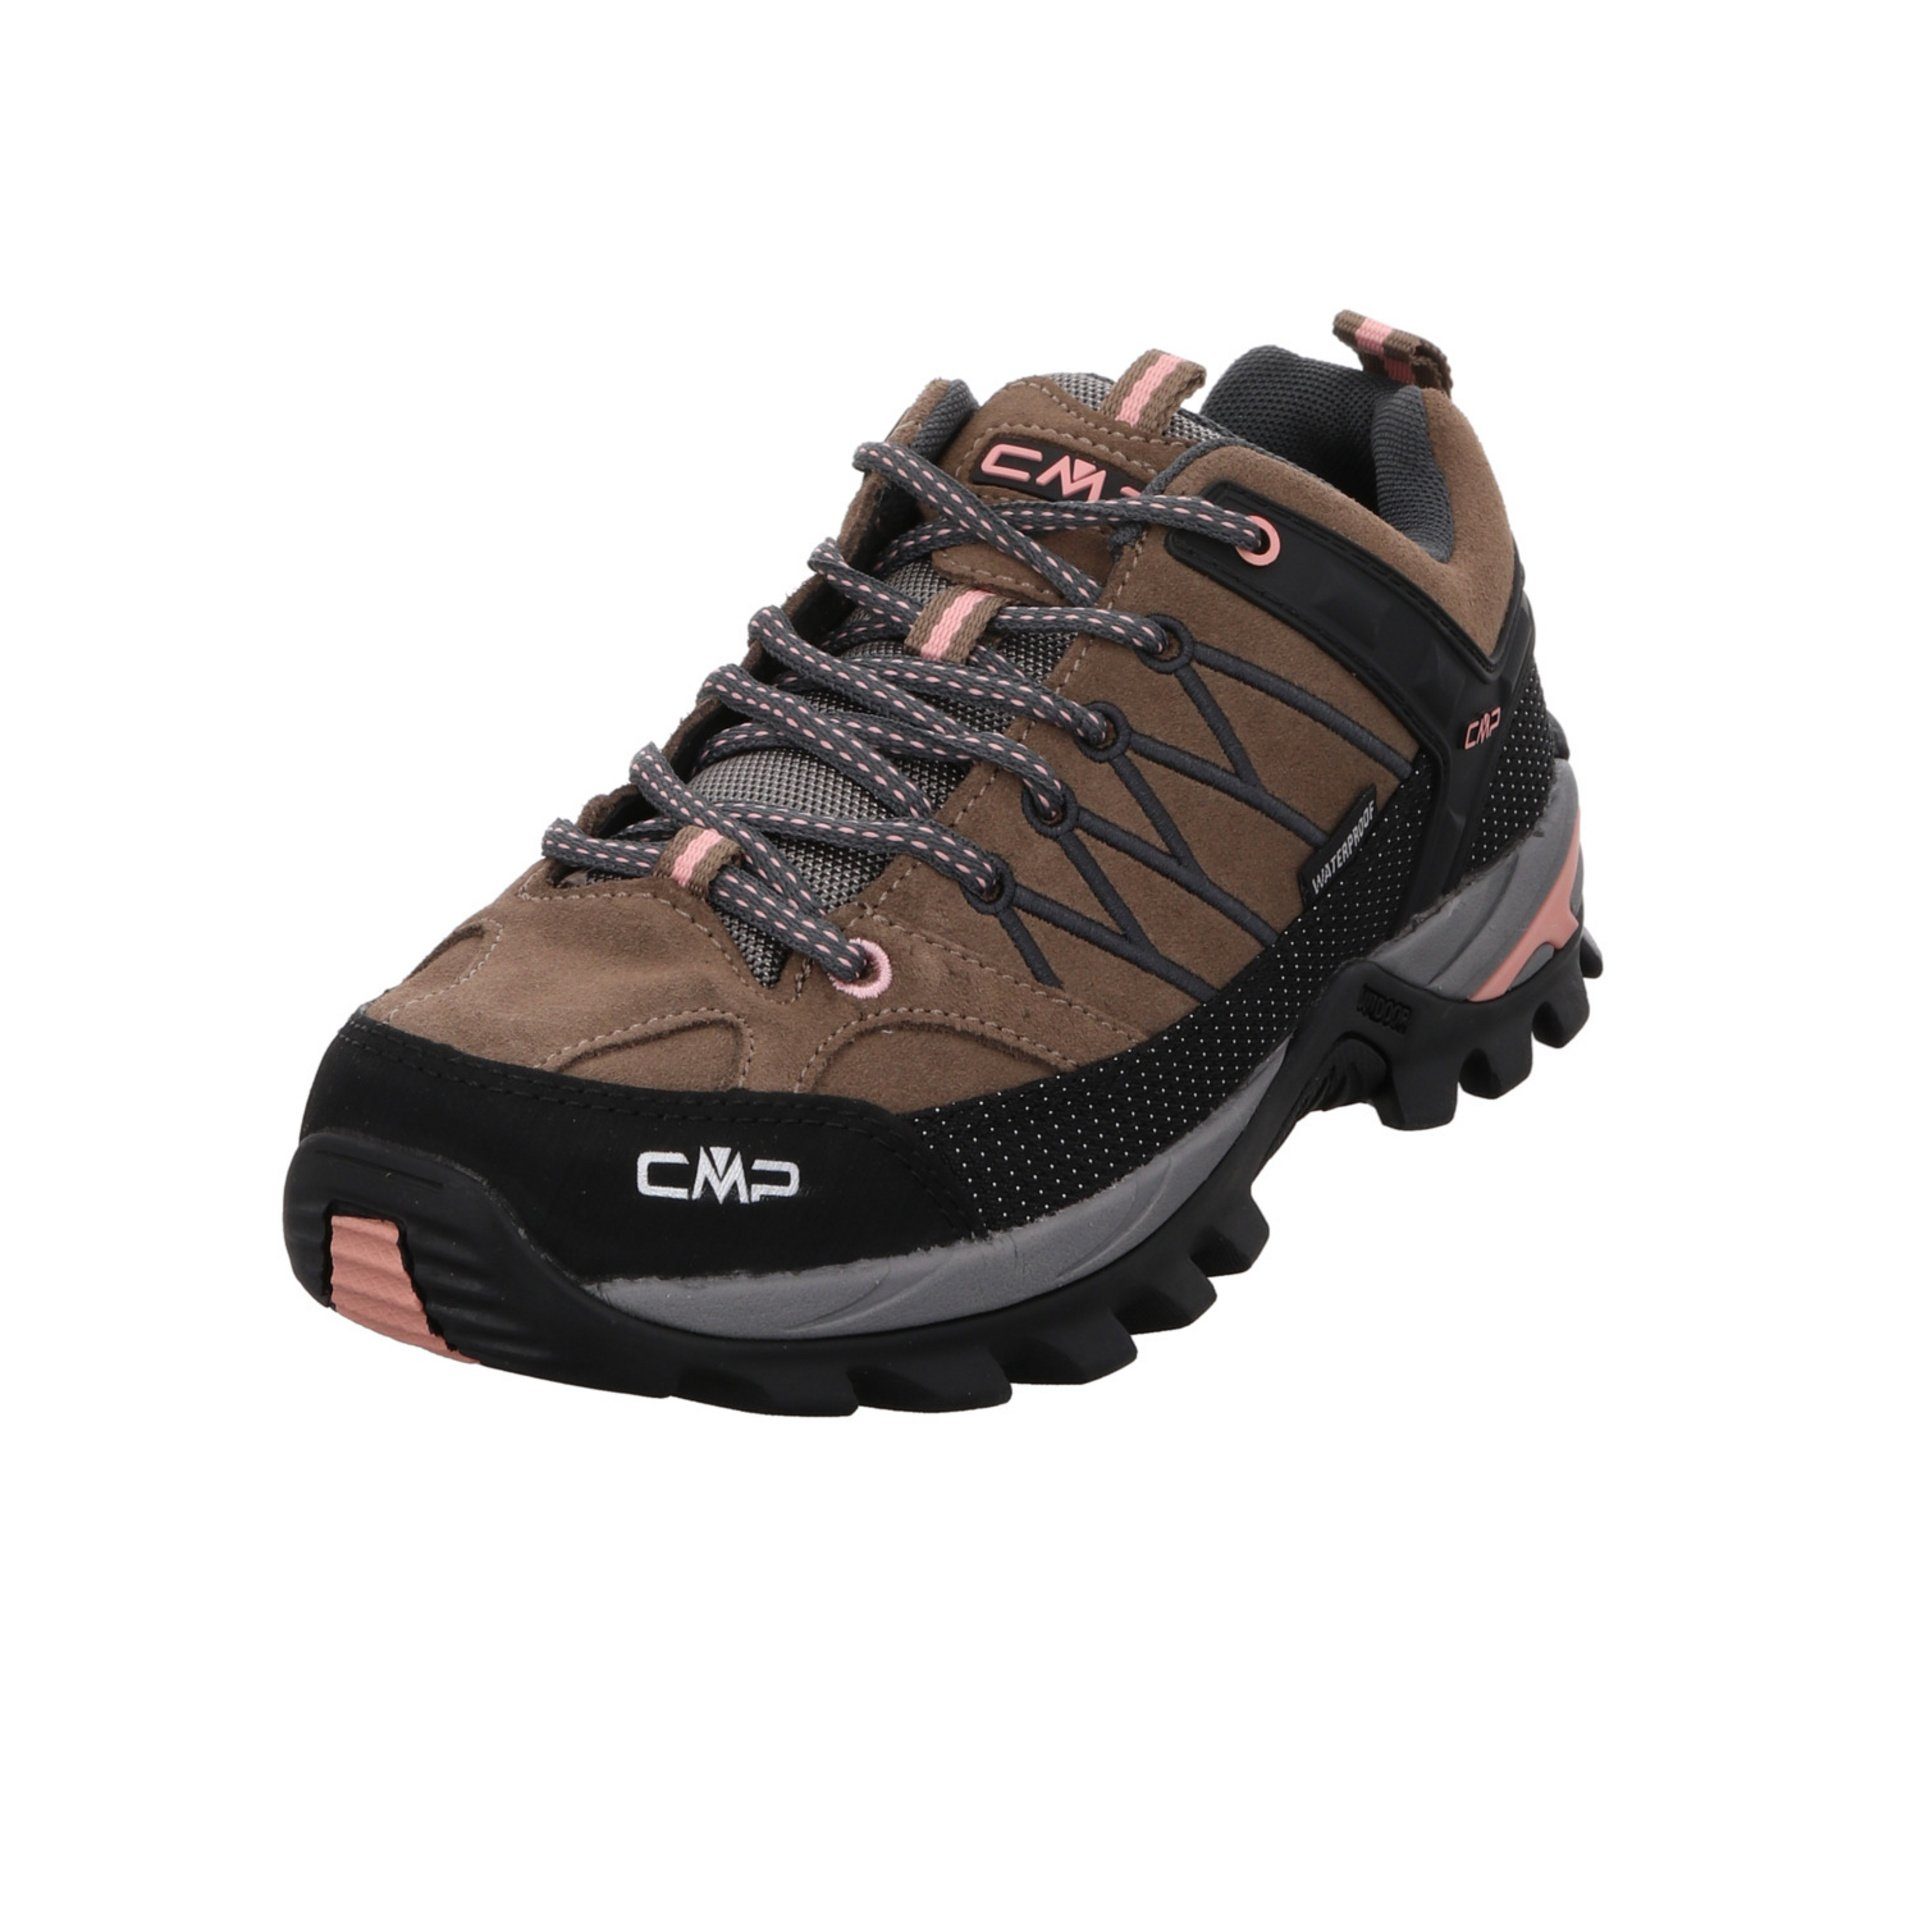 Damen CMP Leder-/Textilkombination CENERE Schuhe Low Rigel Outdoorschuh CAMPAGNOLO Outdoor Outdoorschuh